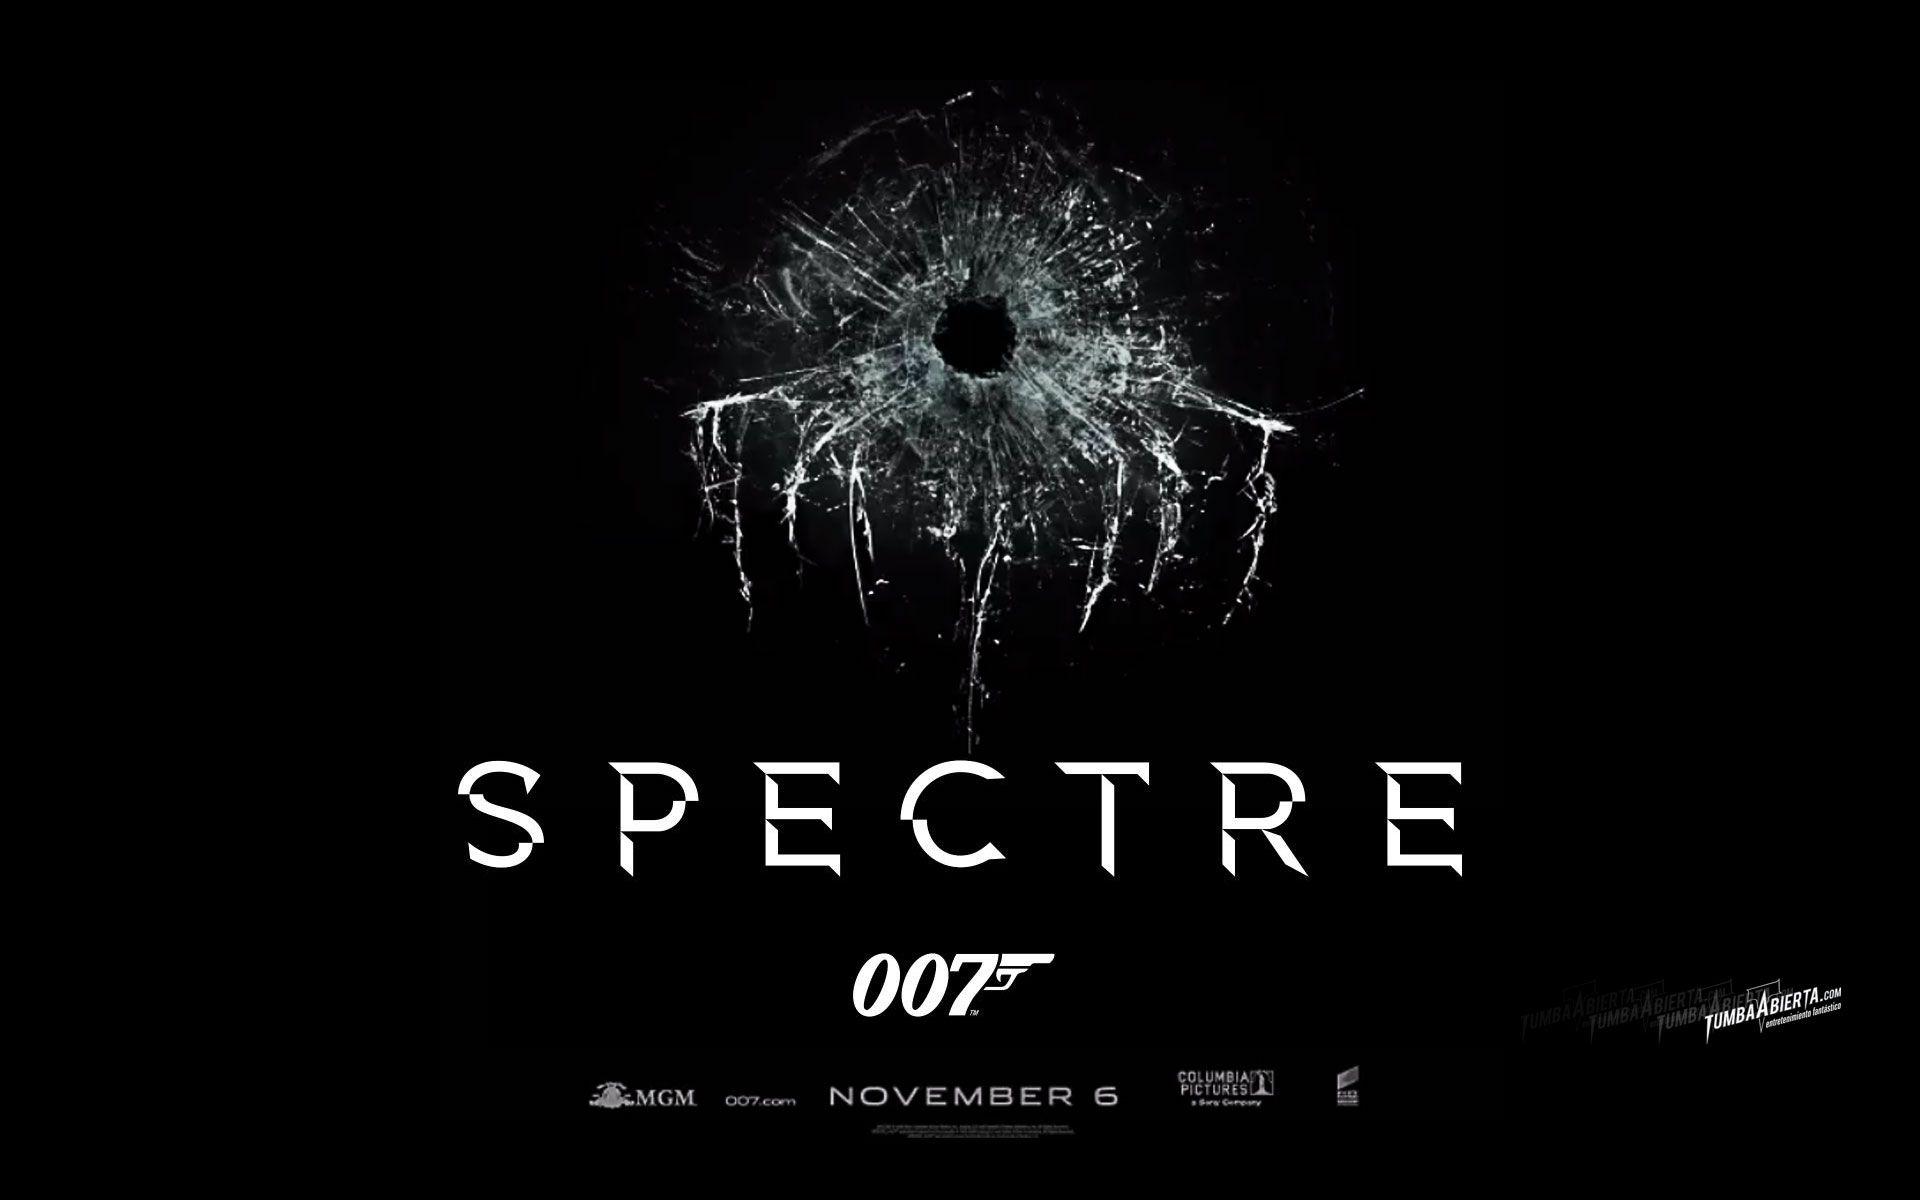 Spectre 007 Wallpaper, 48 PC Spectre 007 Image in Special